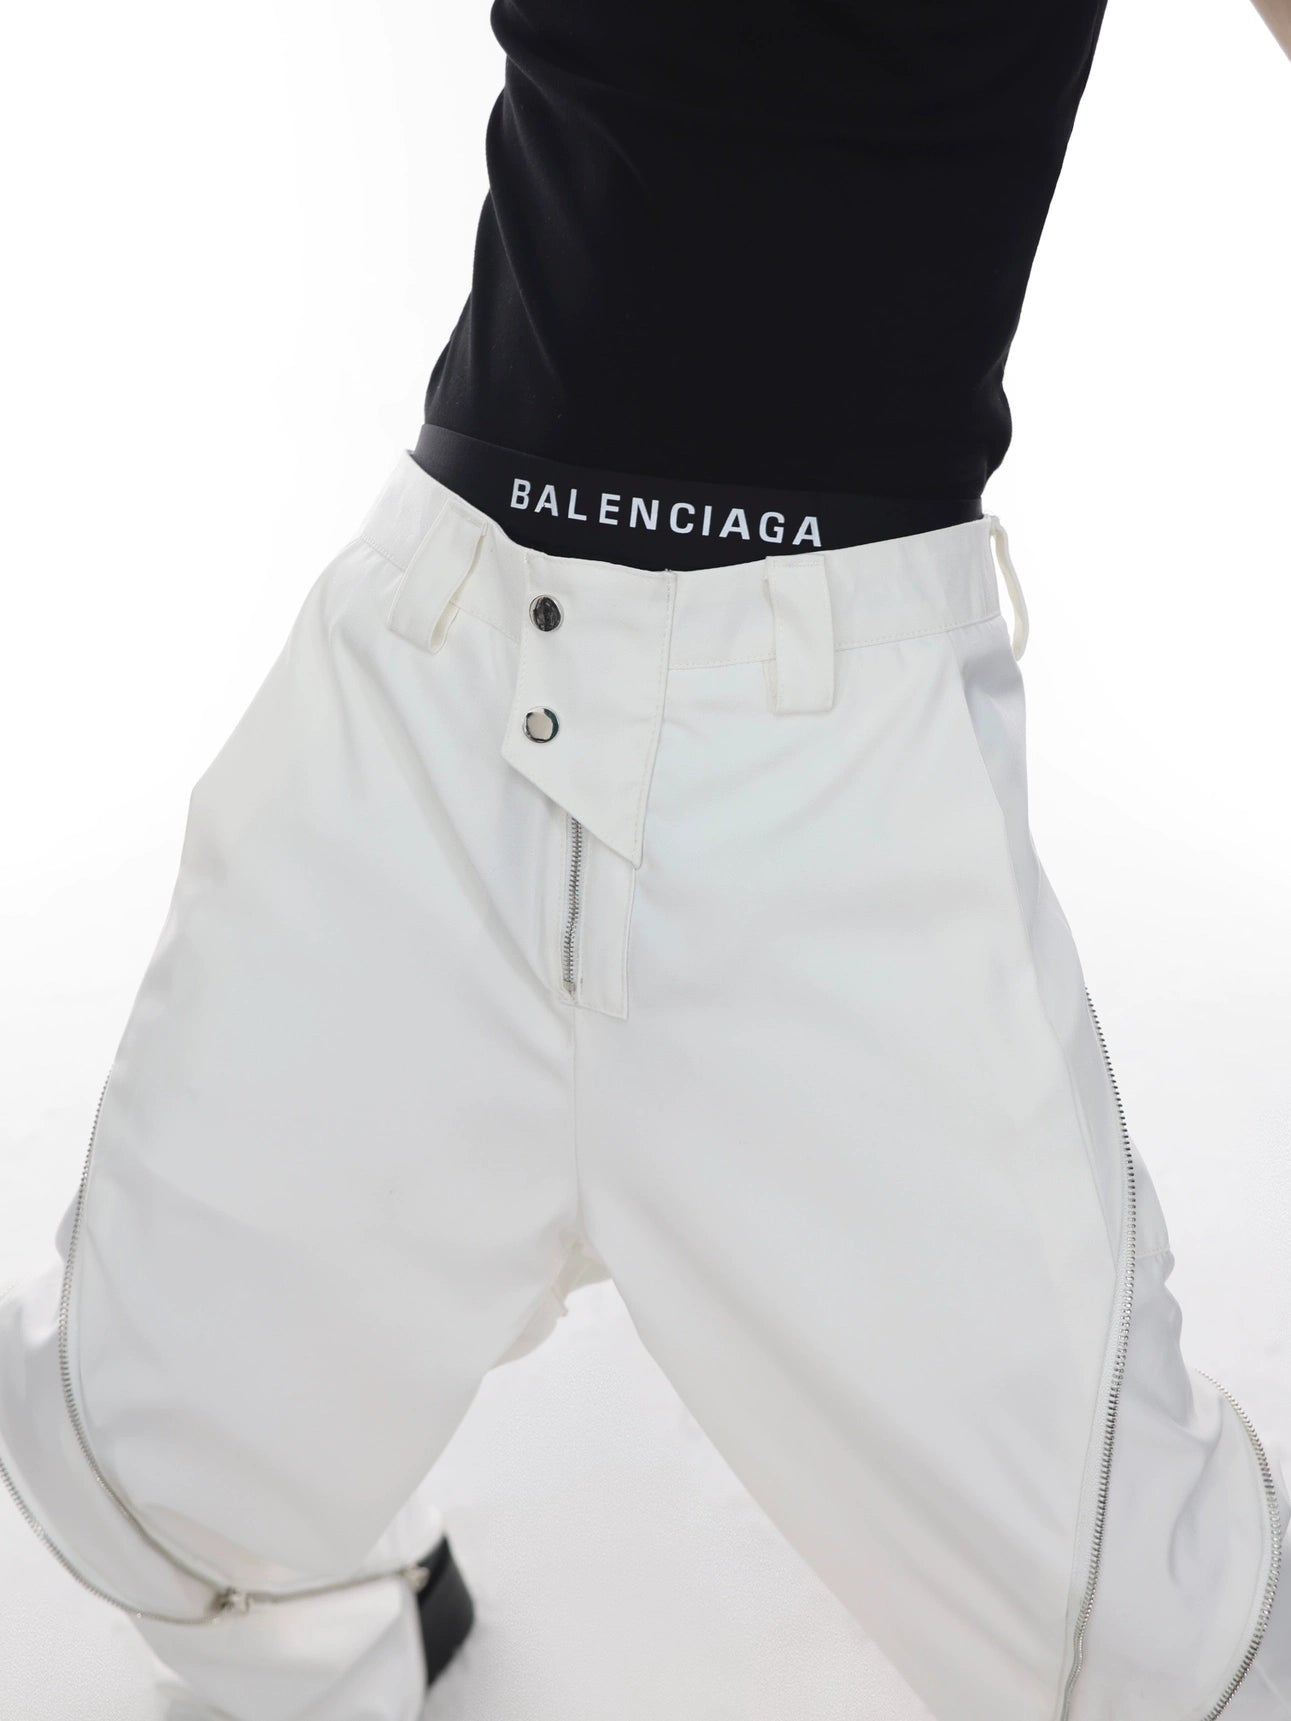 CulturE's original niche structure, design with zipper, split bootcut trousers, draped slacks and white trousers